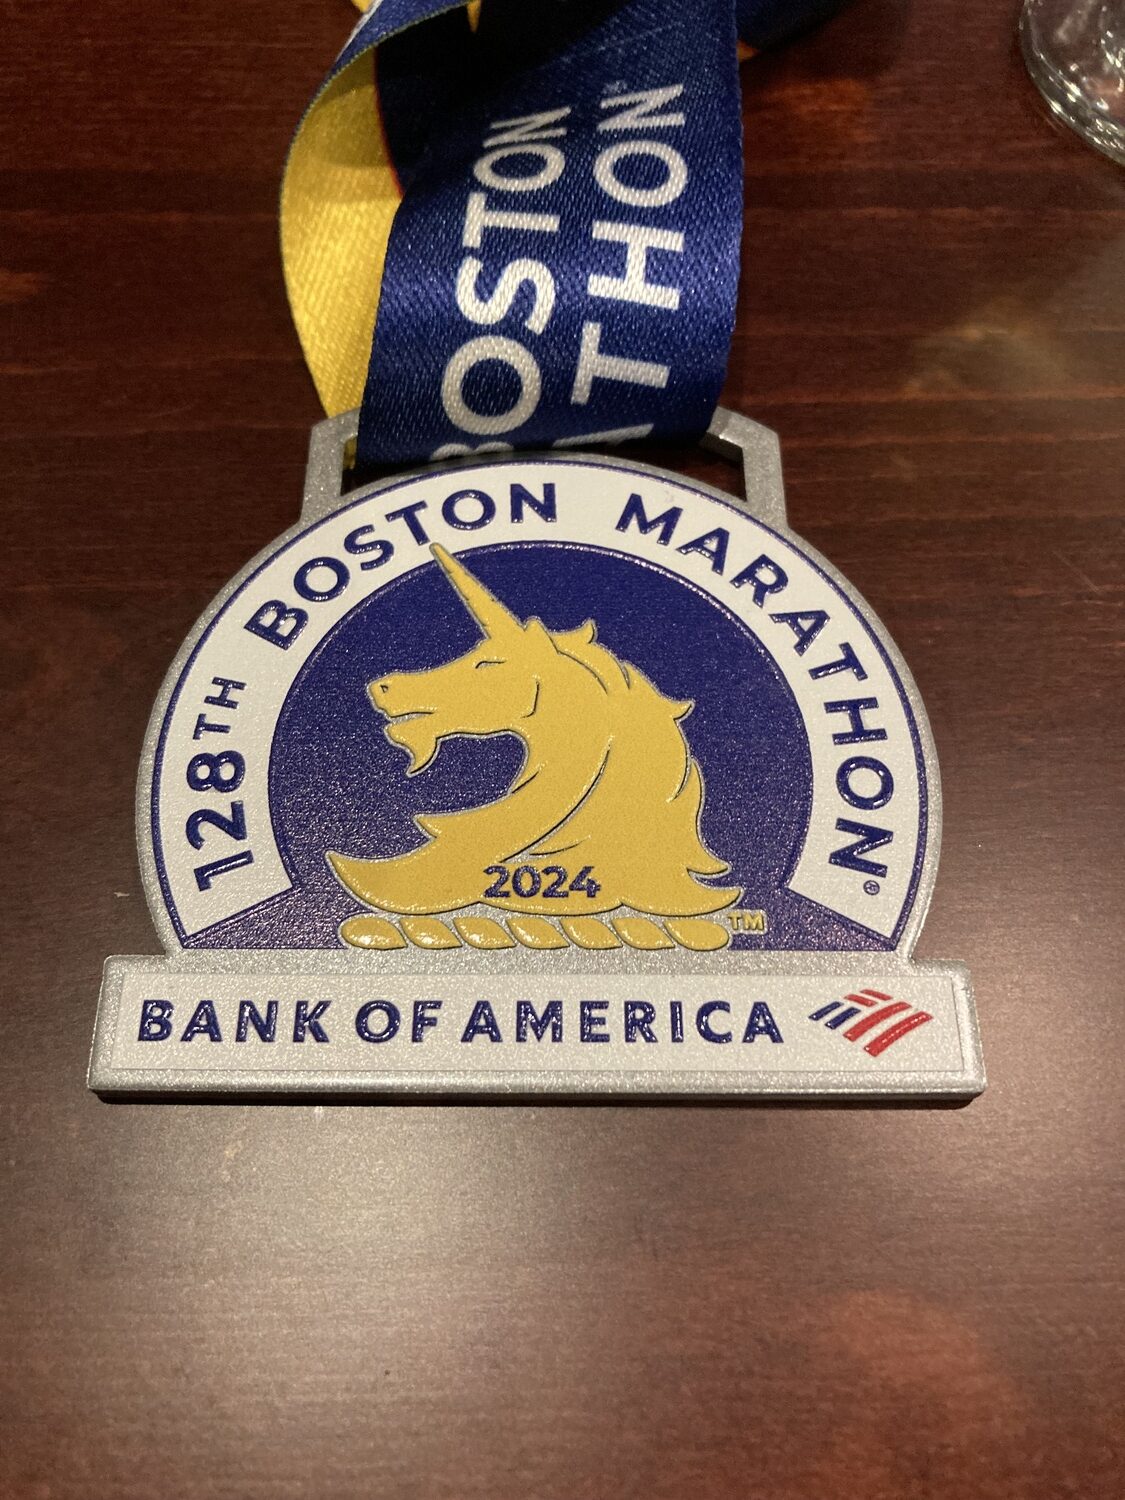 Gail Miranda's Boston Marathon medal.